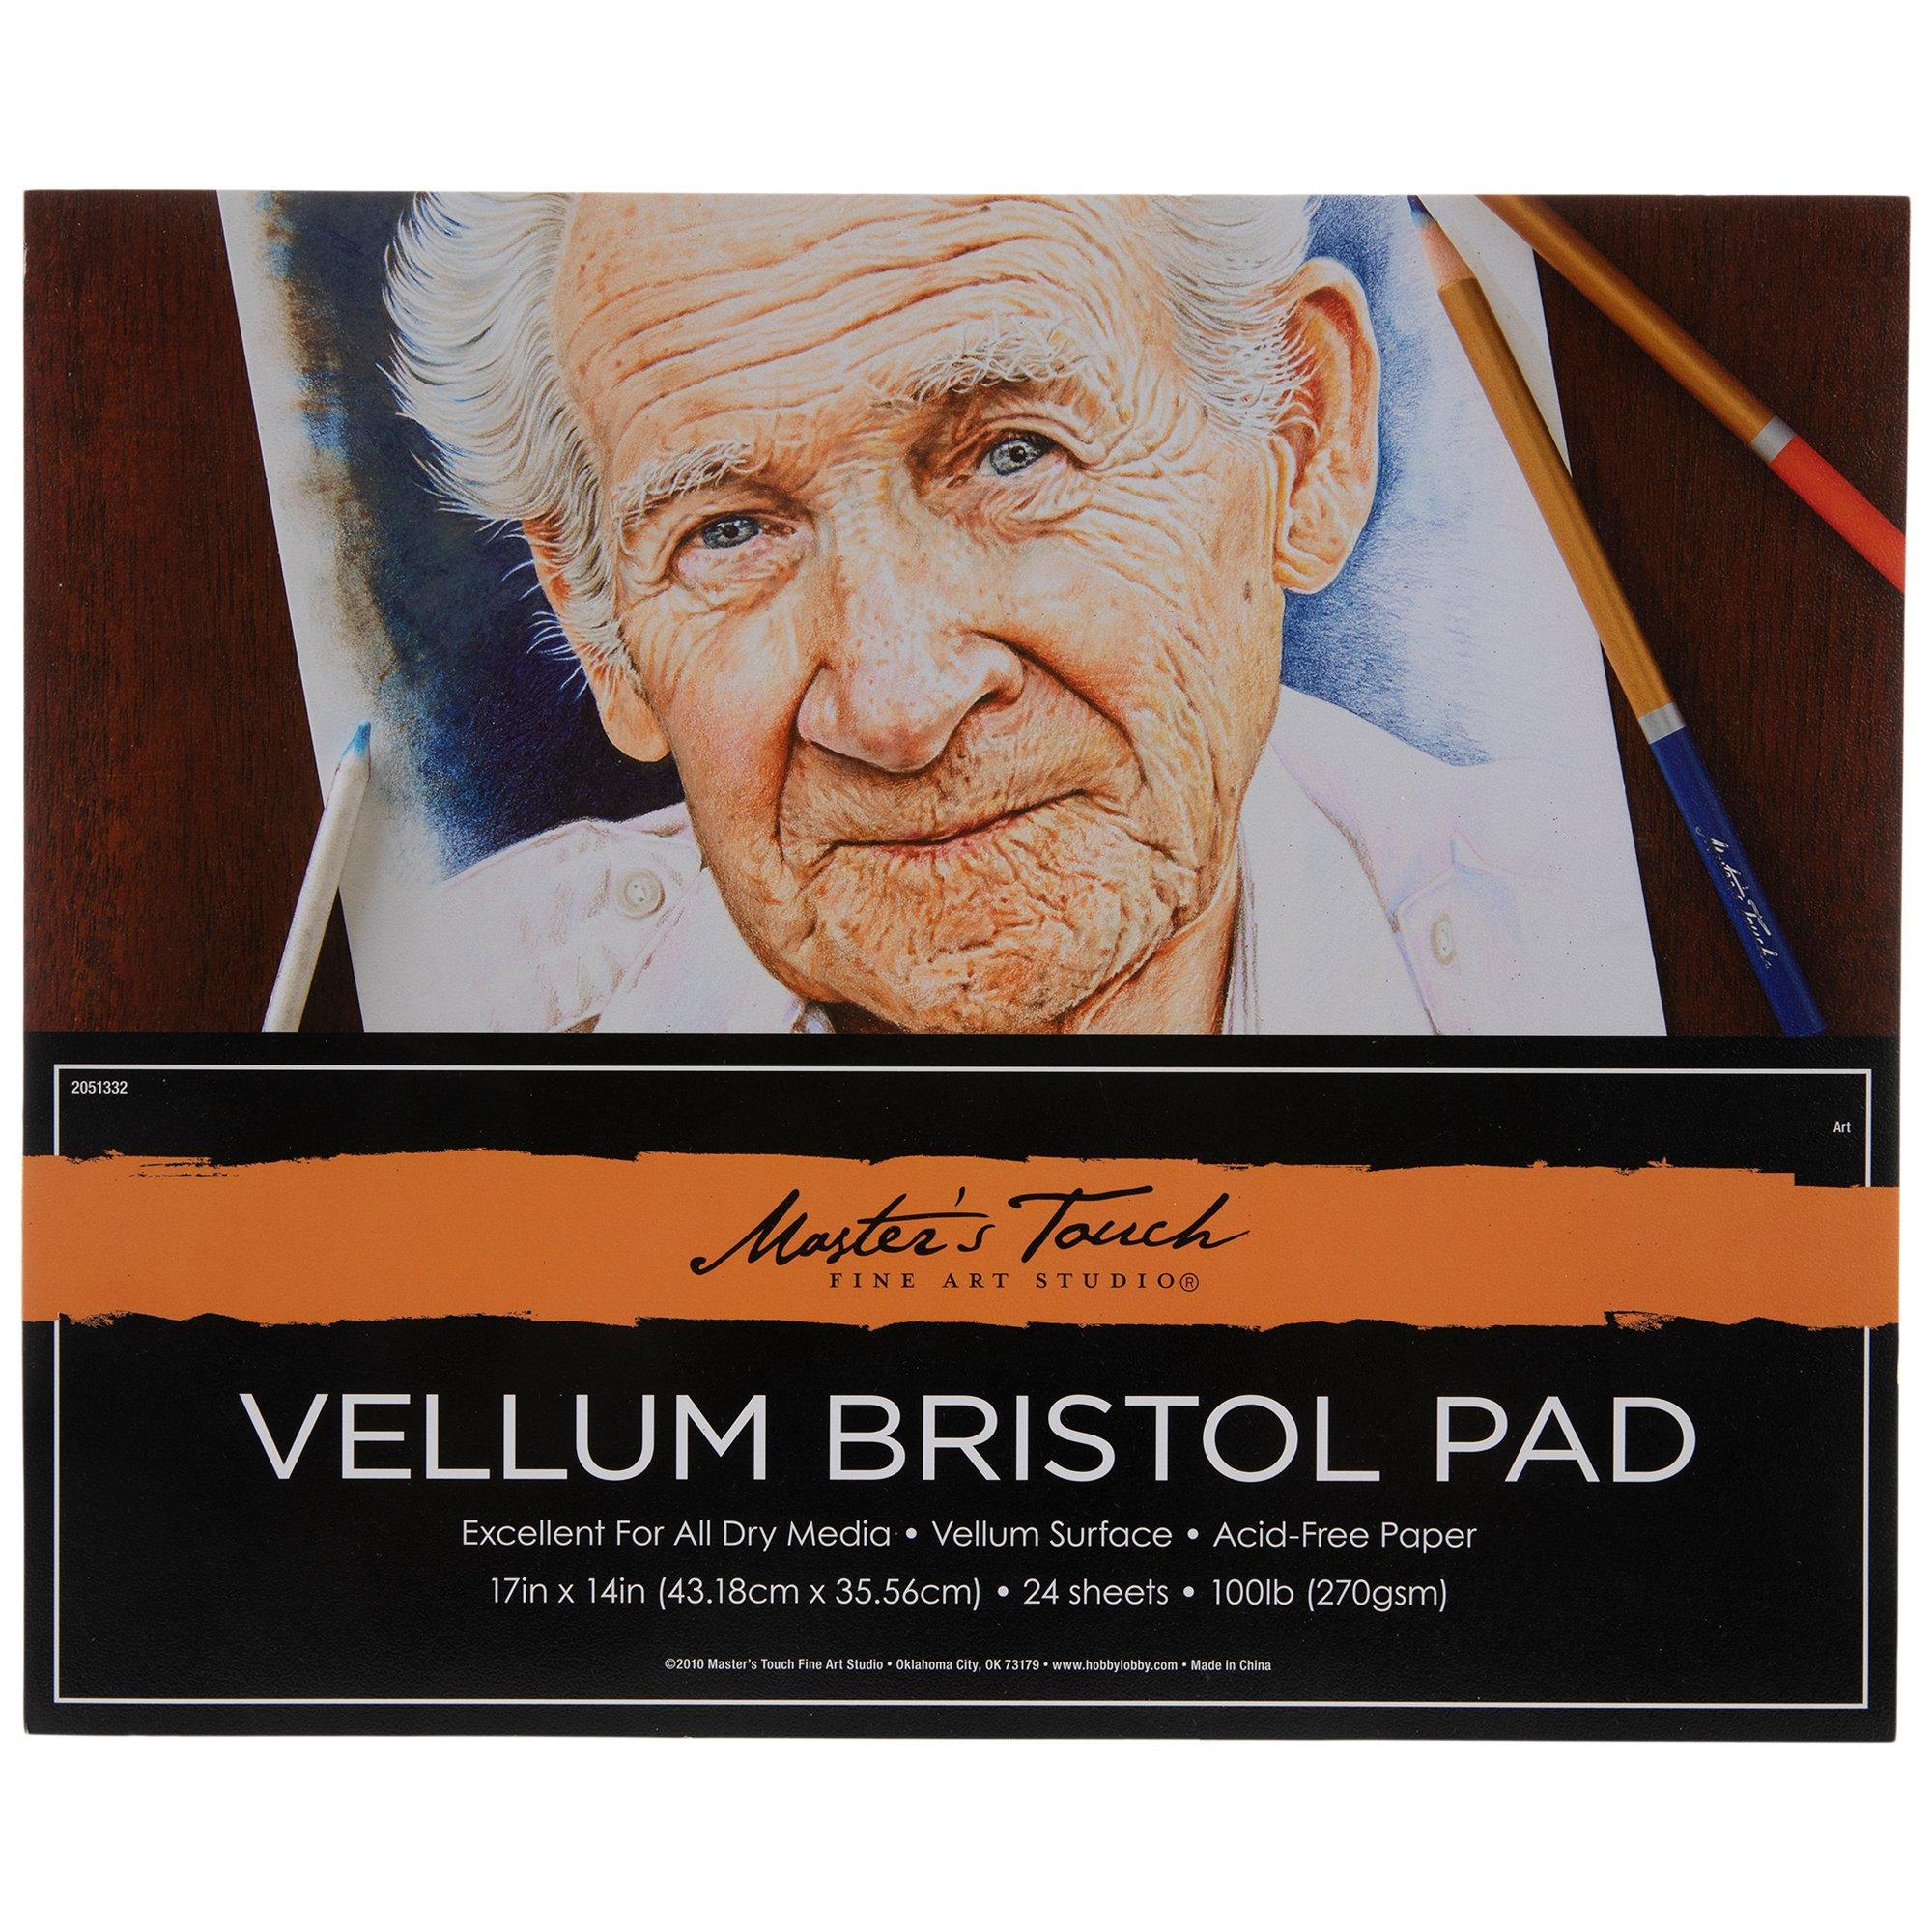 2 New pads of, 11 x 17 White Strathmore Bristol. - artists - craigslist